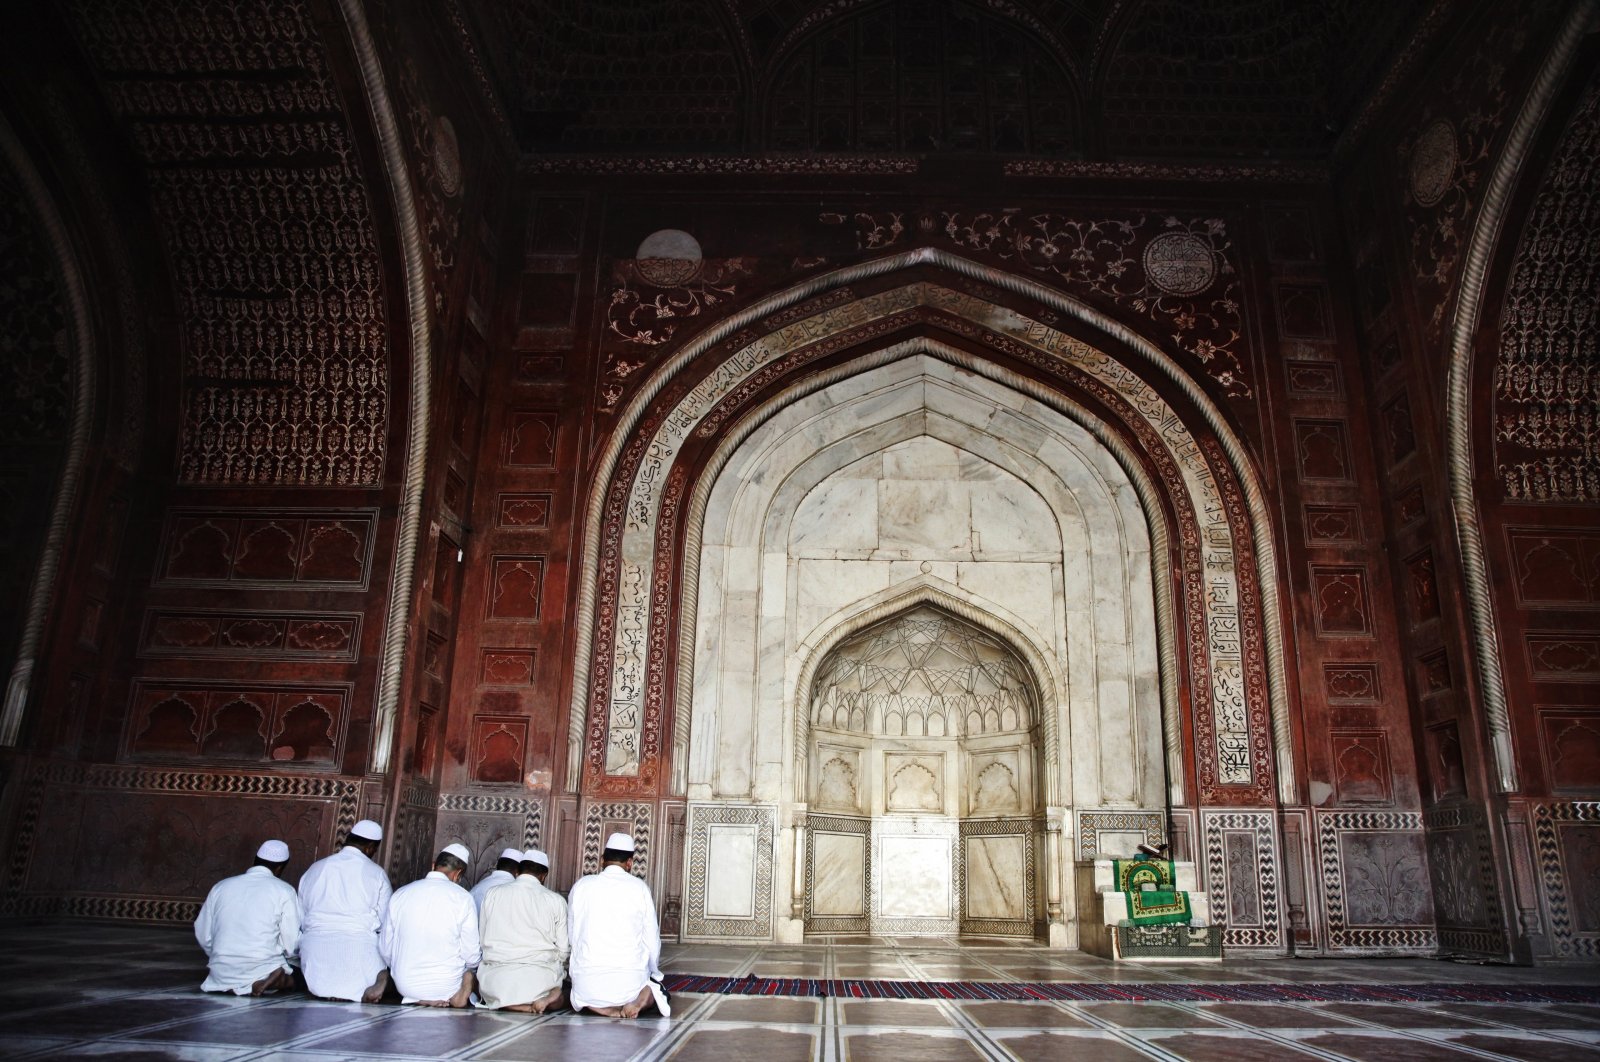 In this undated photo, Muslim men pray at a mosque in Agra, Uttar Pradesh, India. (Shutterstock Photo)